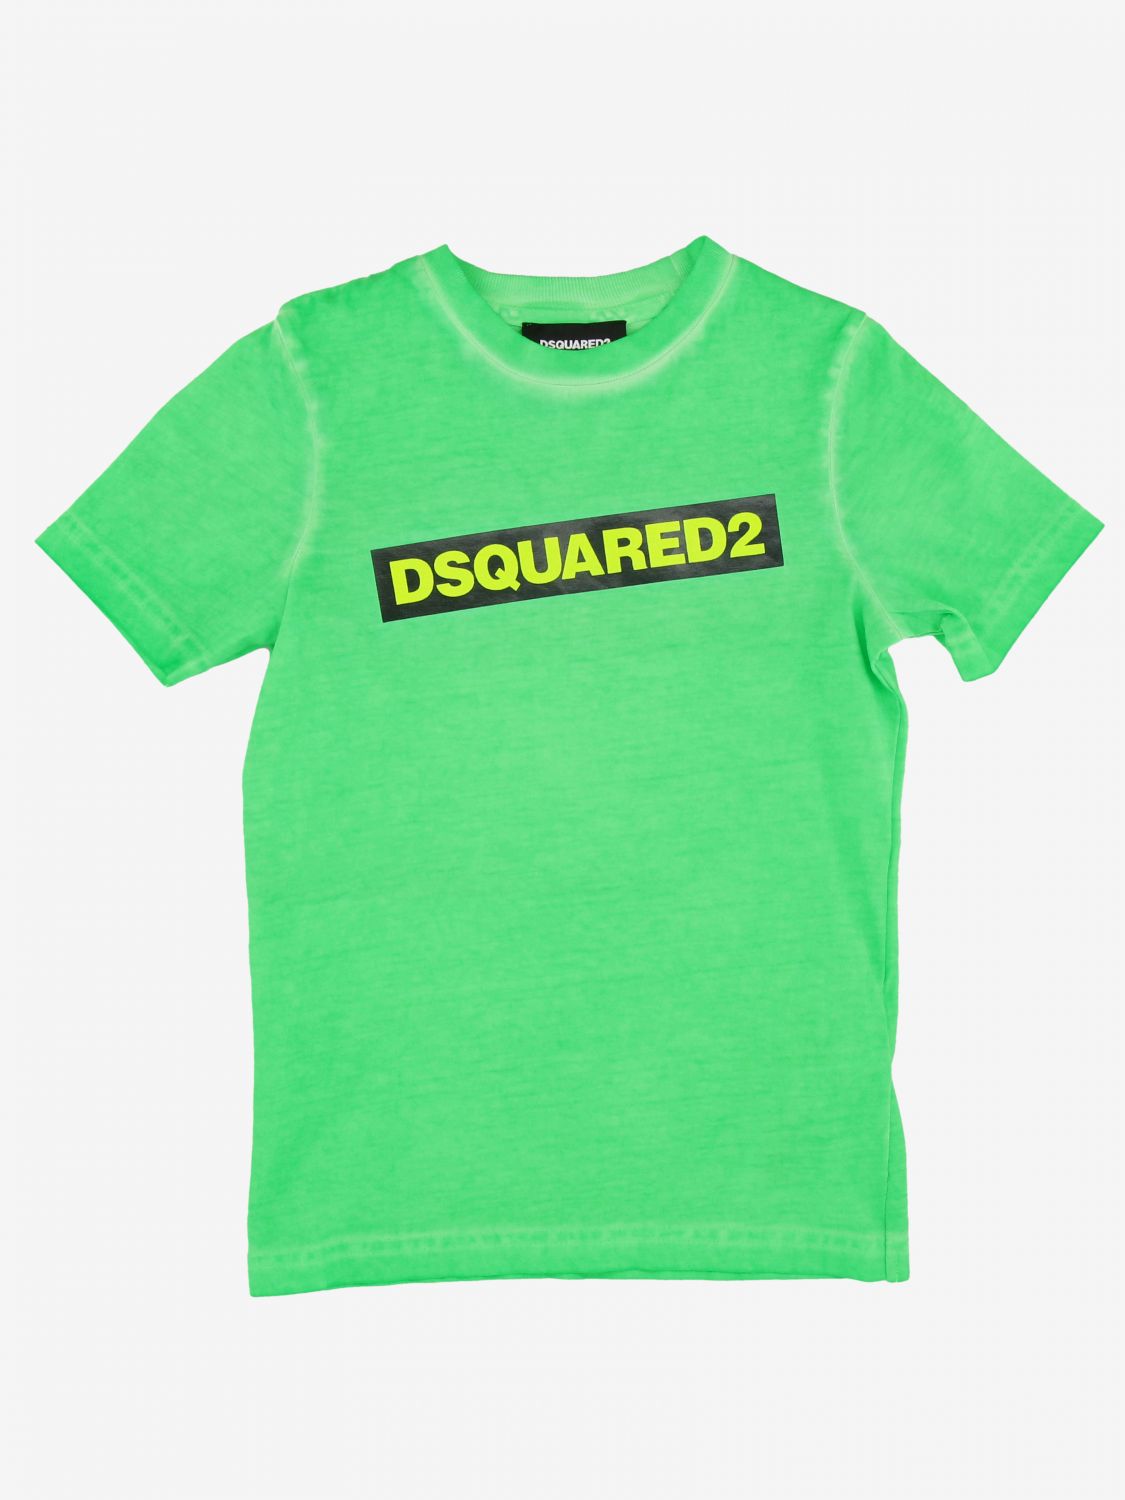 dsquared 1 t shirt